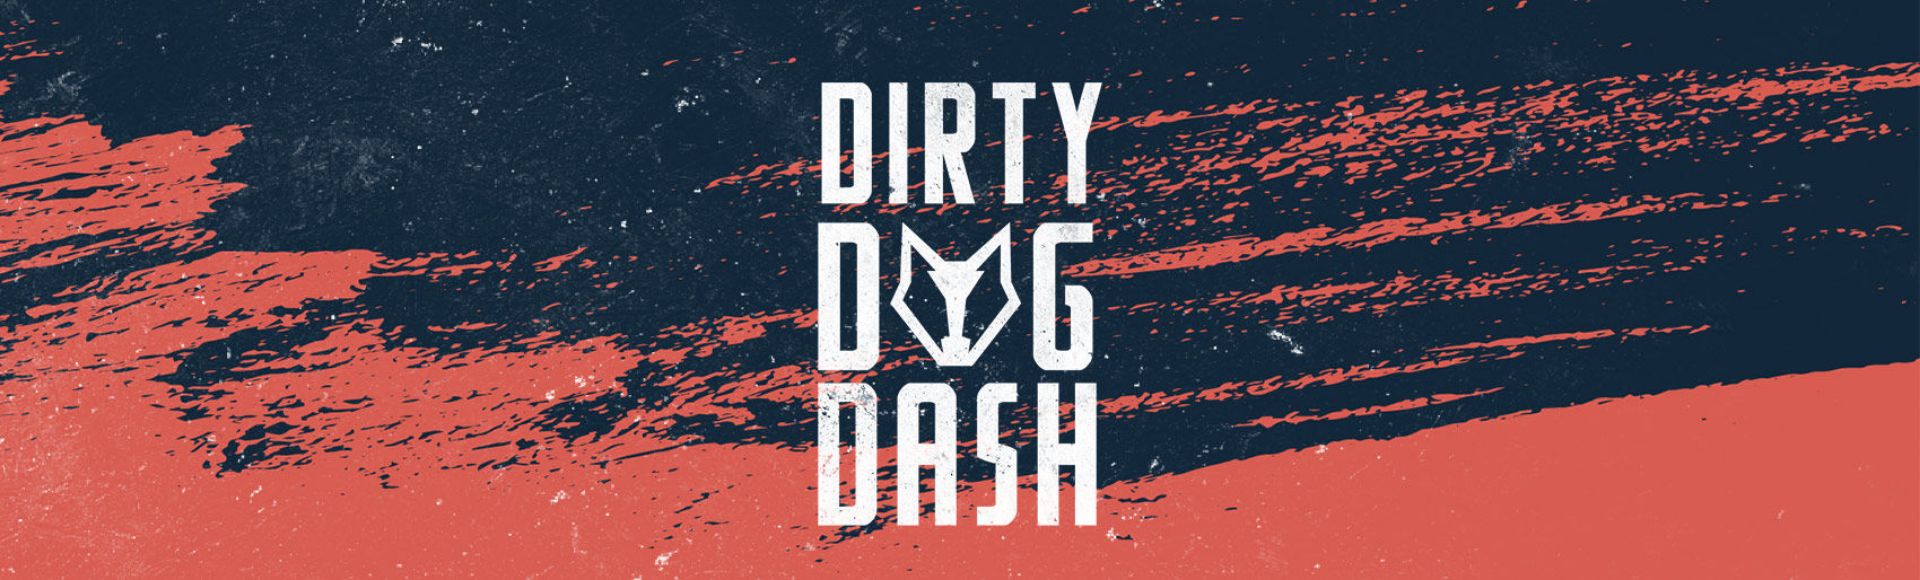 Dirty-Dog-1